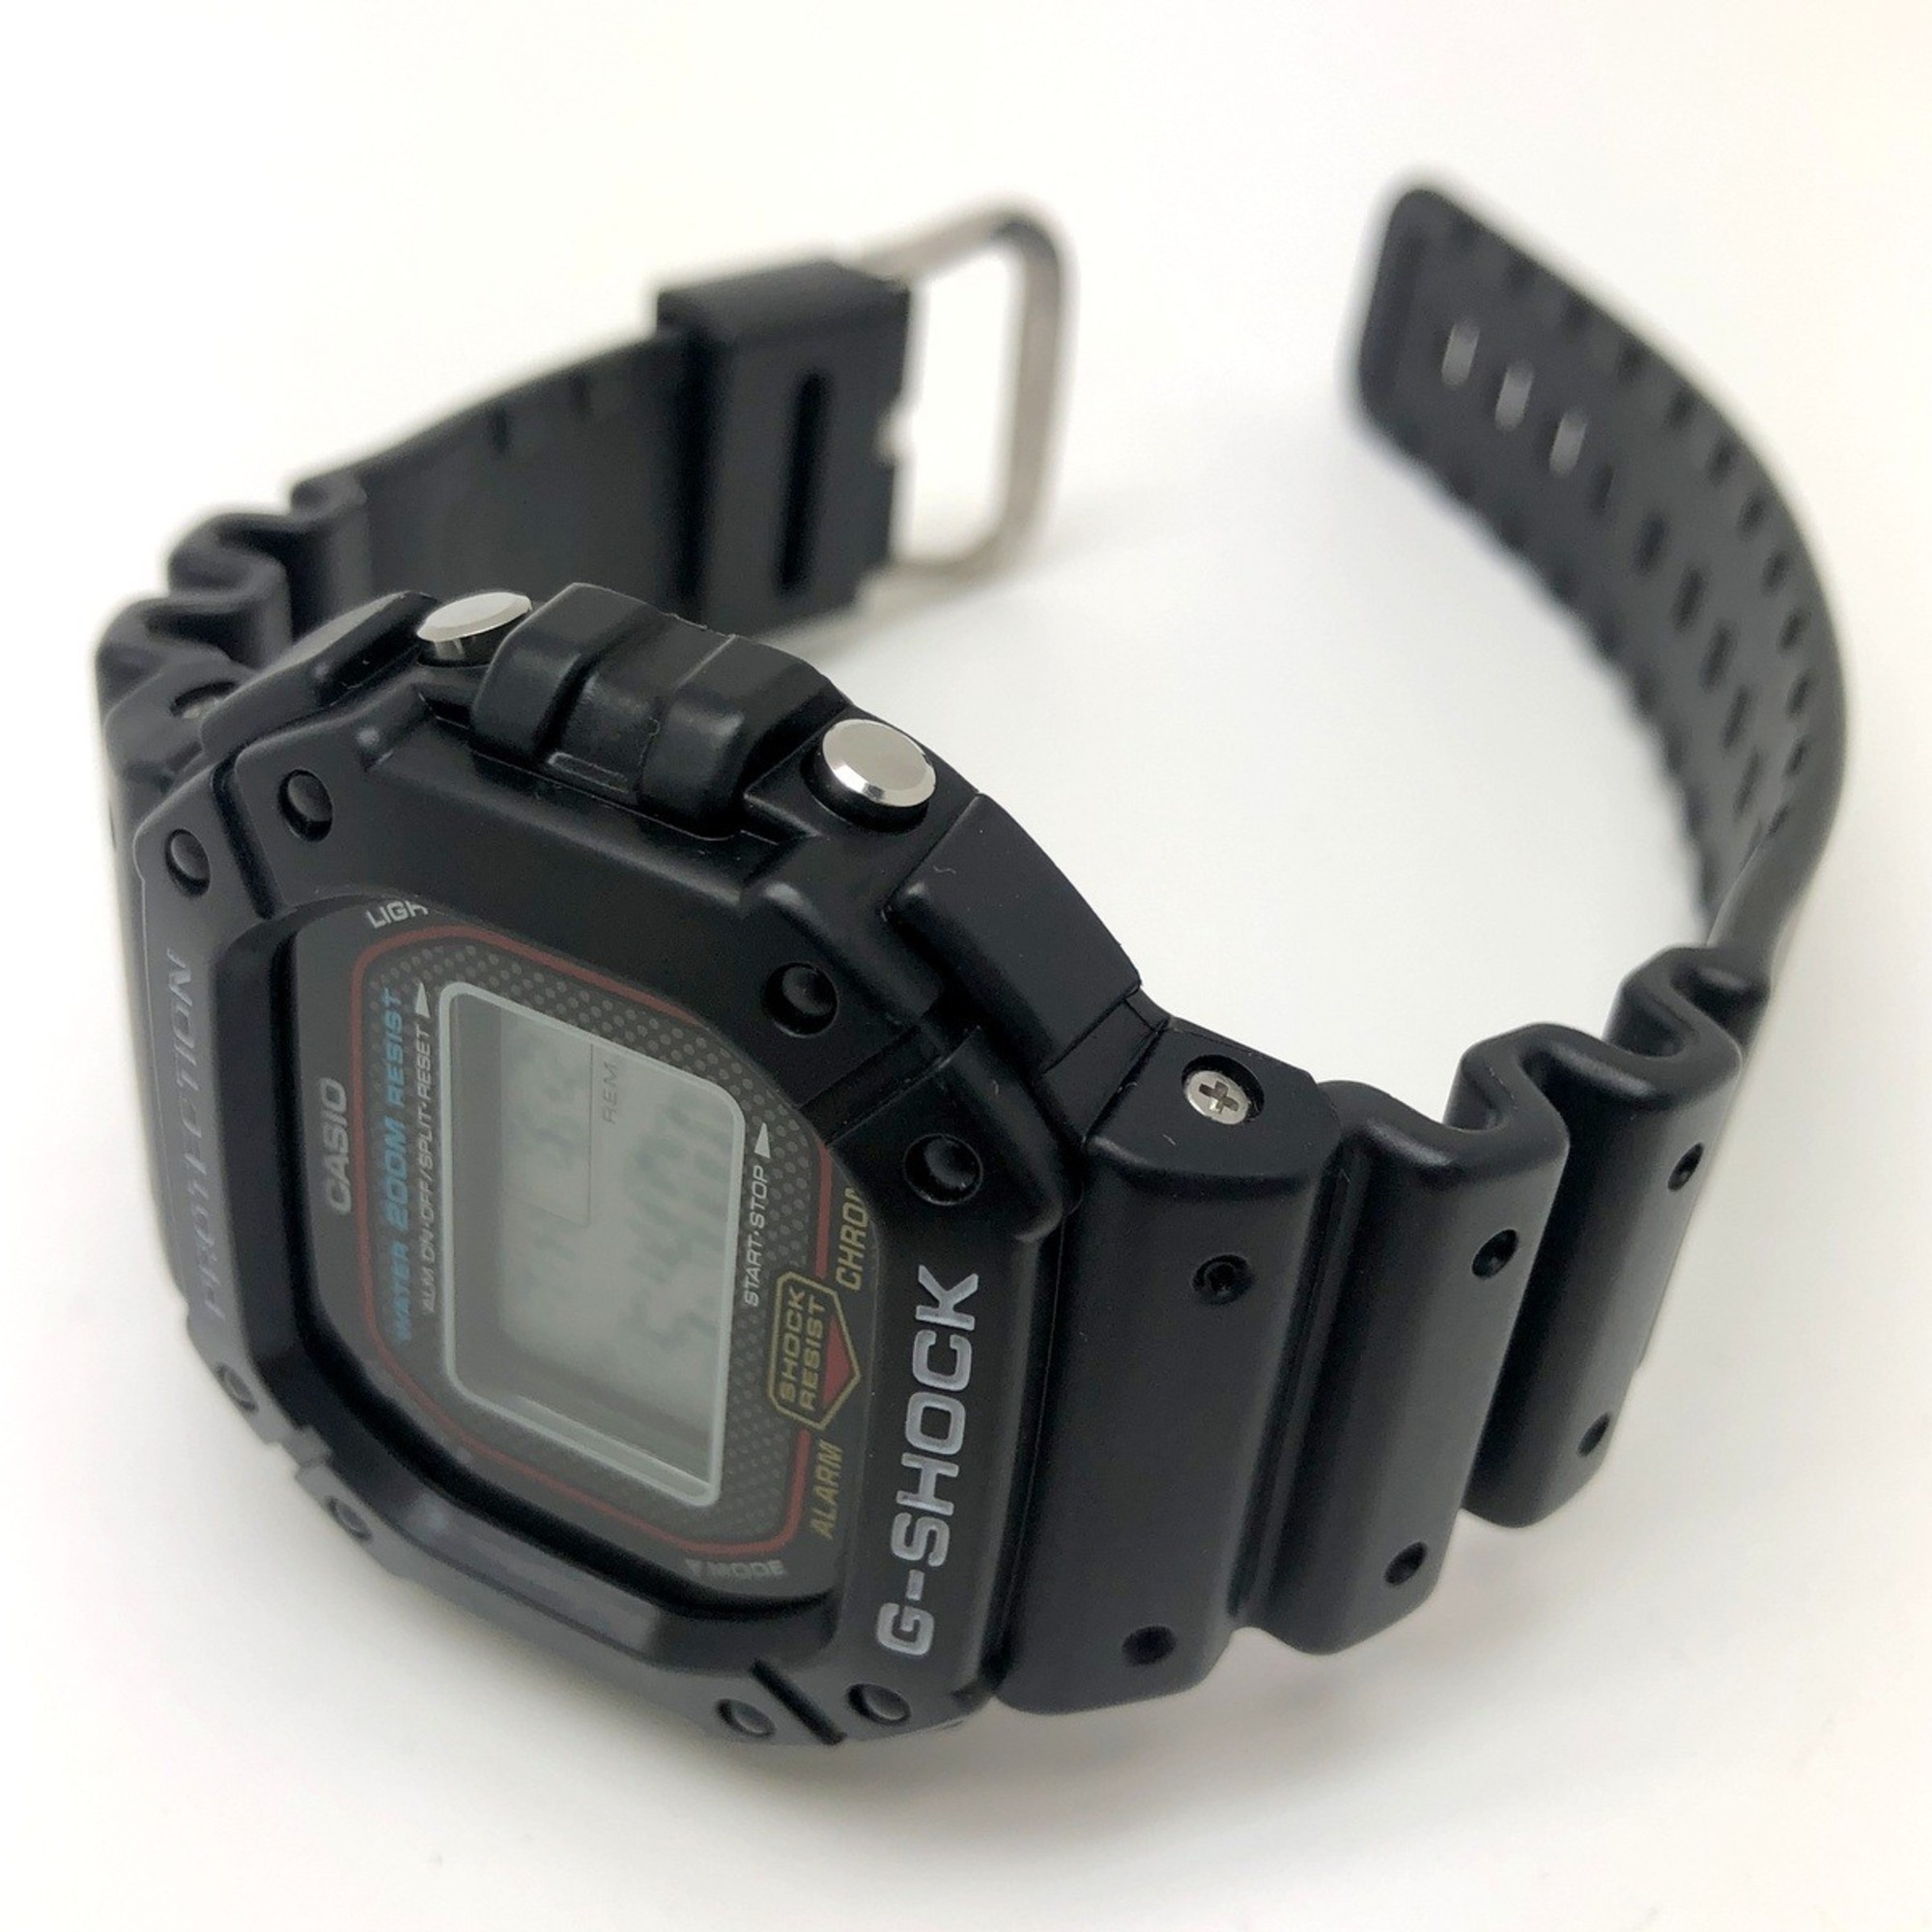 Casio G-Shock Quartz Watch dw-5300-1bv brand name